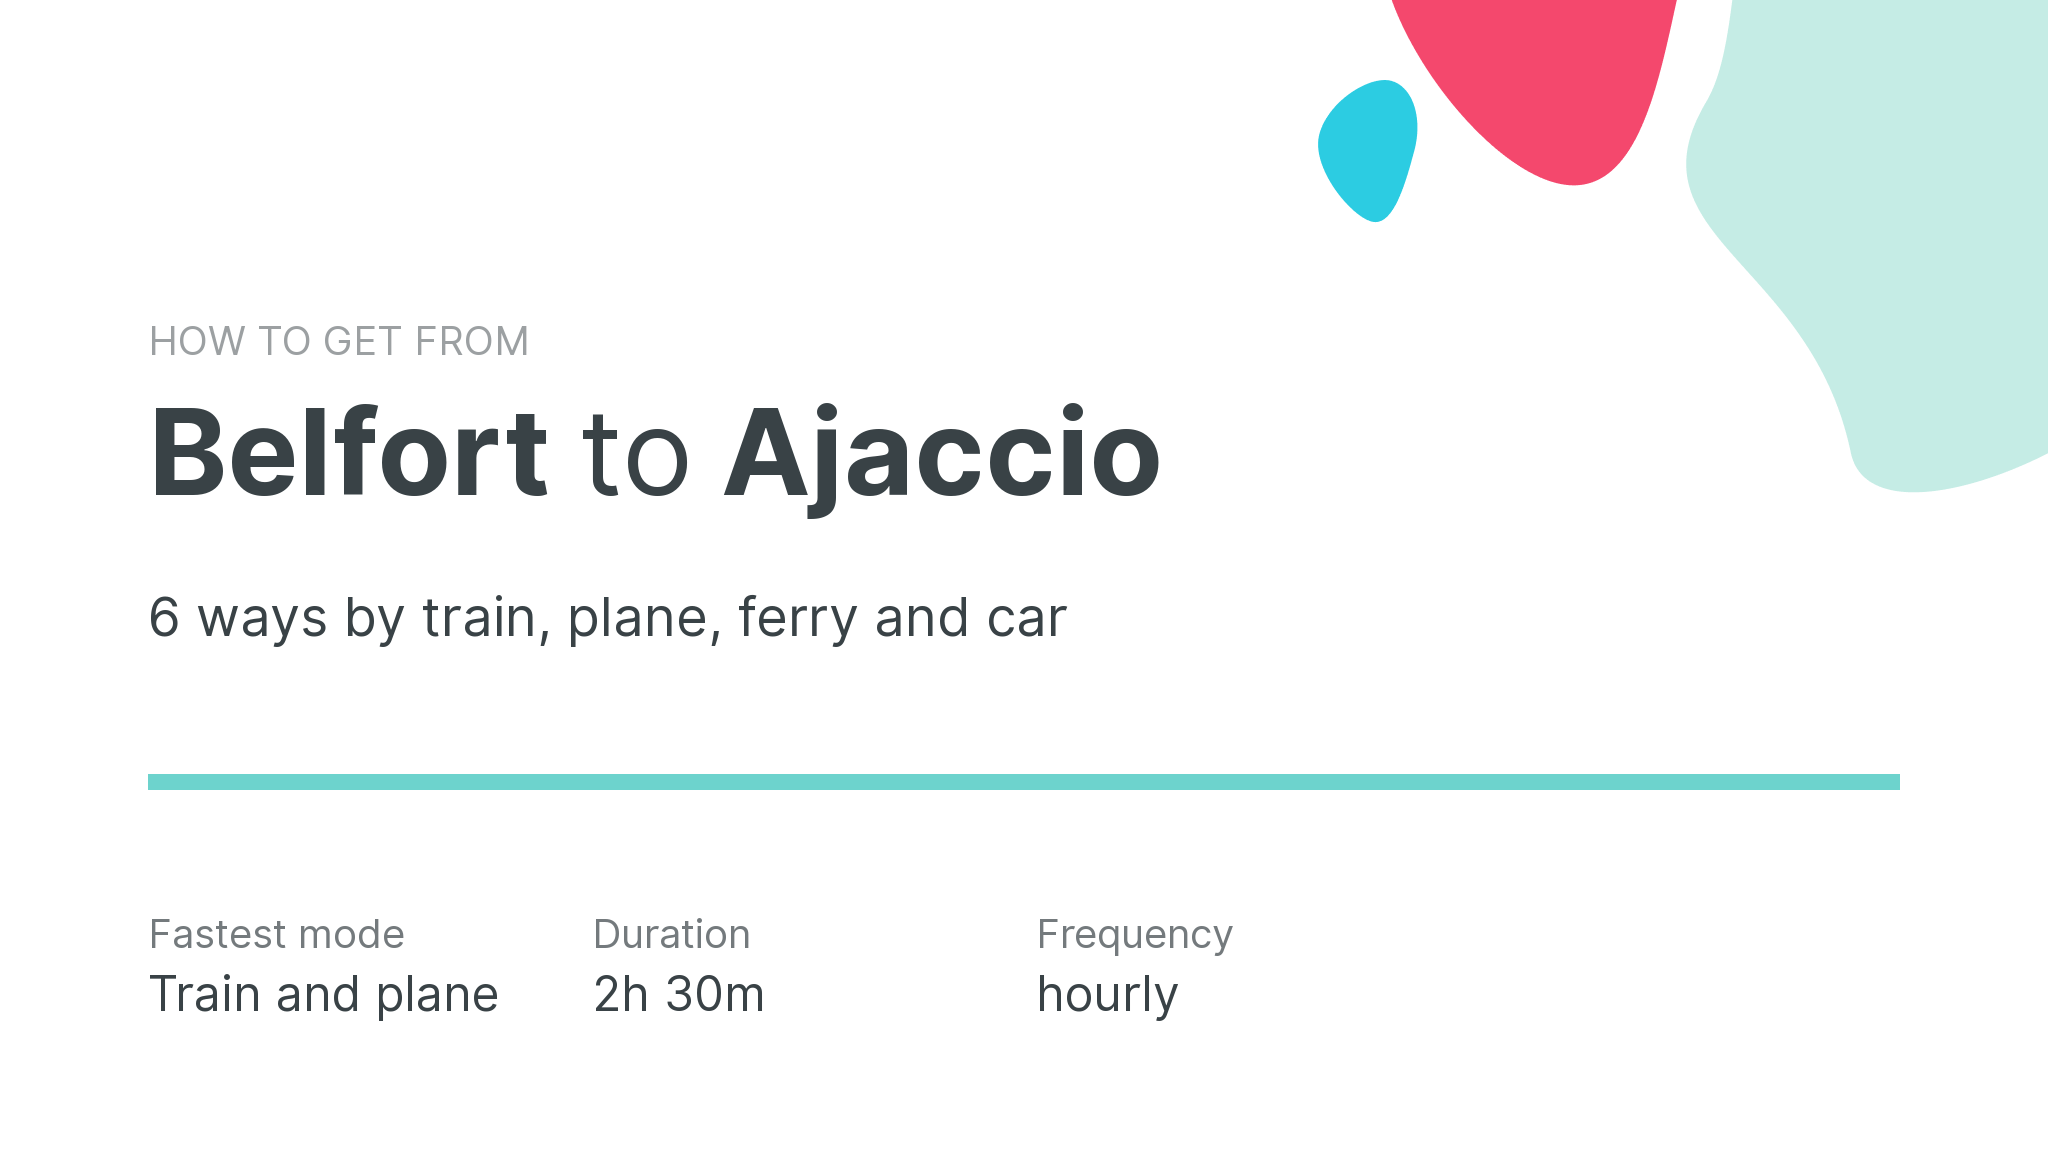 How do I get from Belfort to Ajaccio